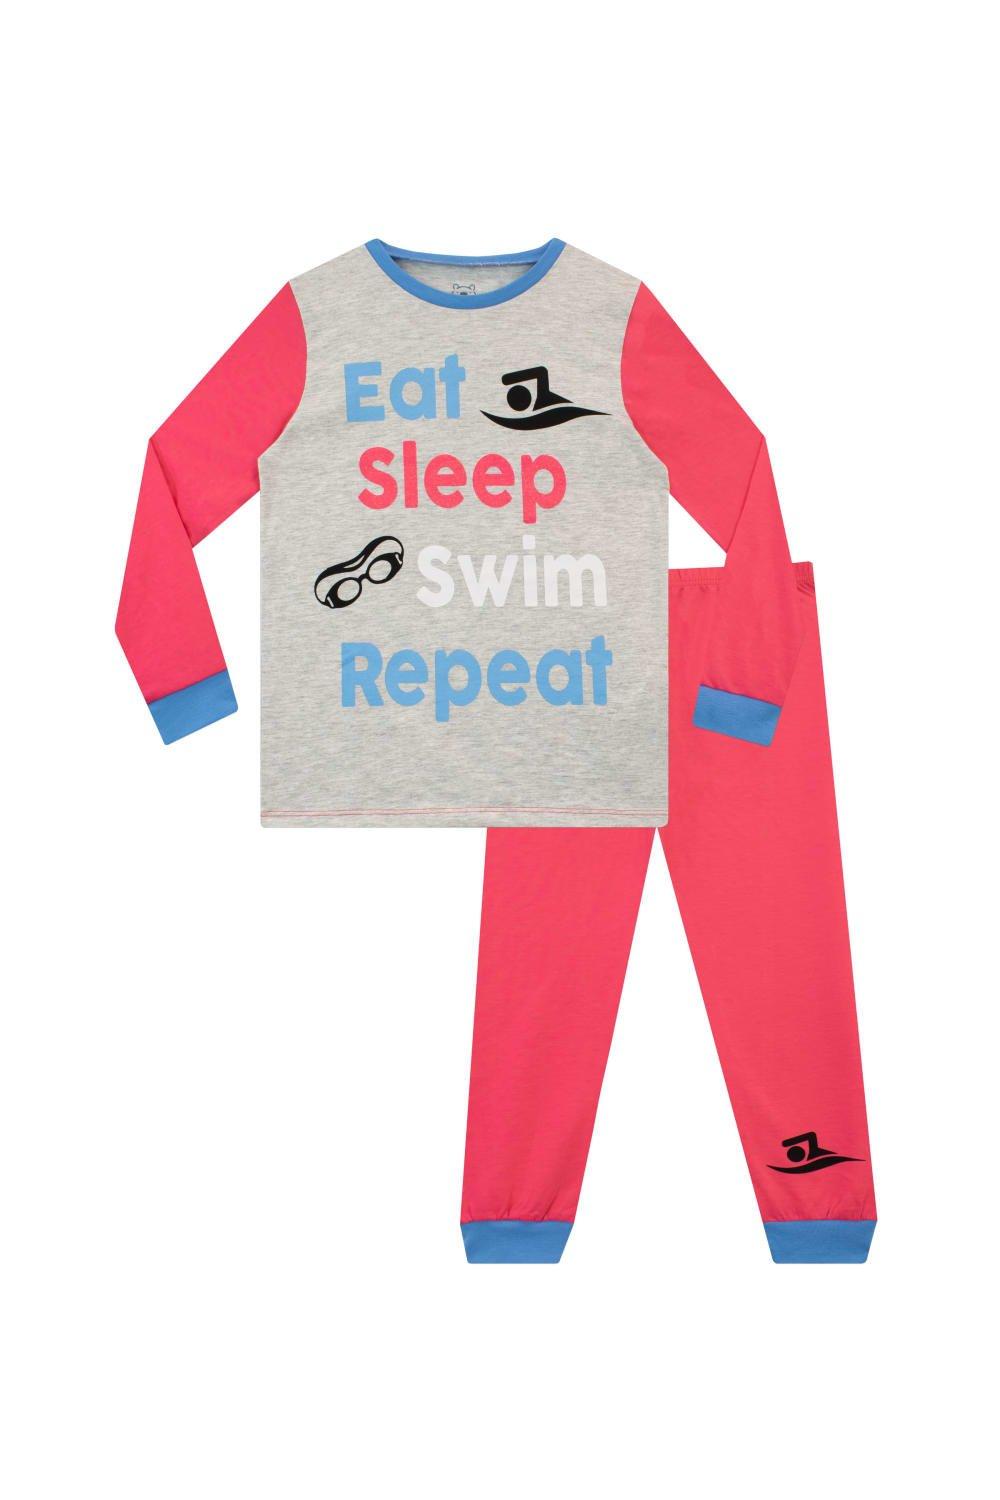 Eat Sleep Repeat Swim Pyjamas